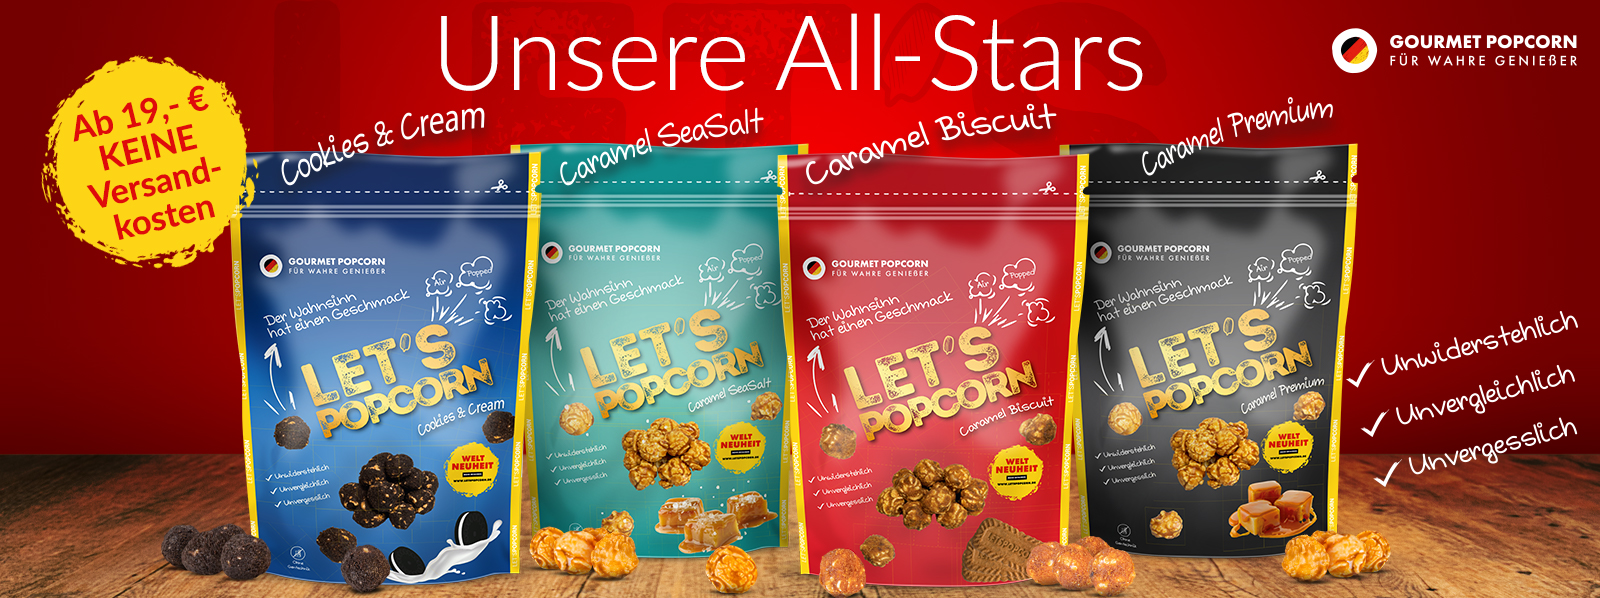 Lets Popcorn, Caramel Biscuit, Caramel SeaSalt, Premium Caramel, Cream and Cookies, digitalisierend, Dirk Neumann